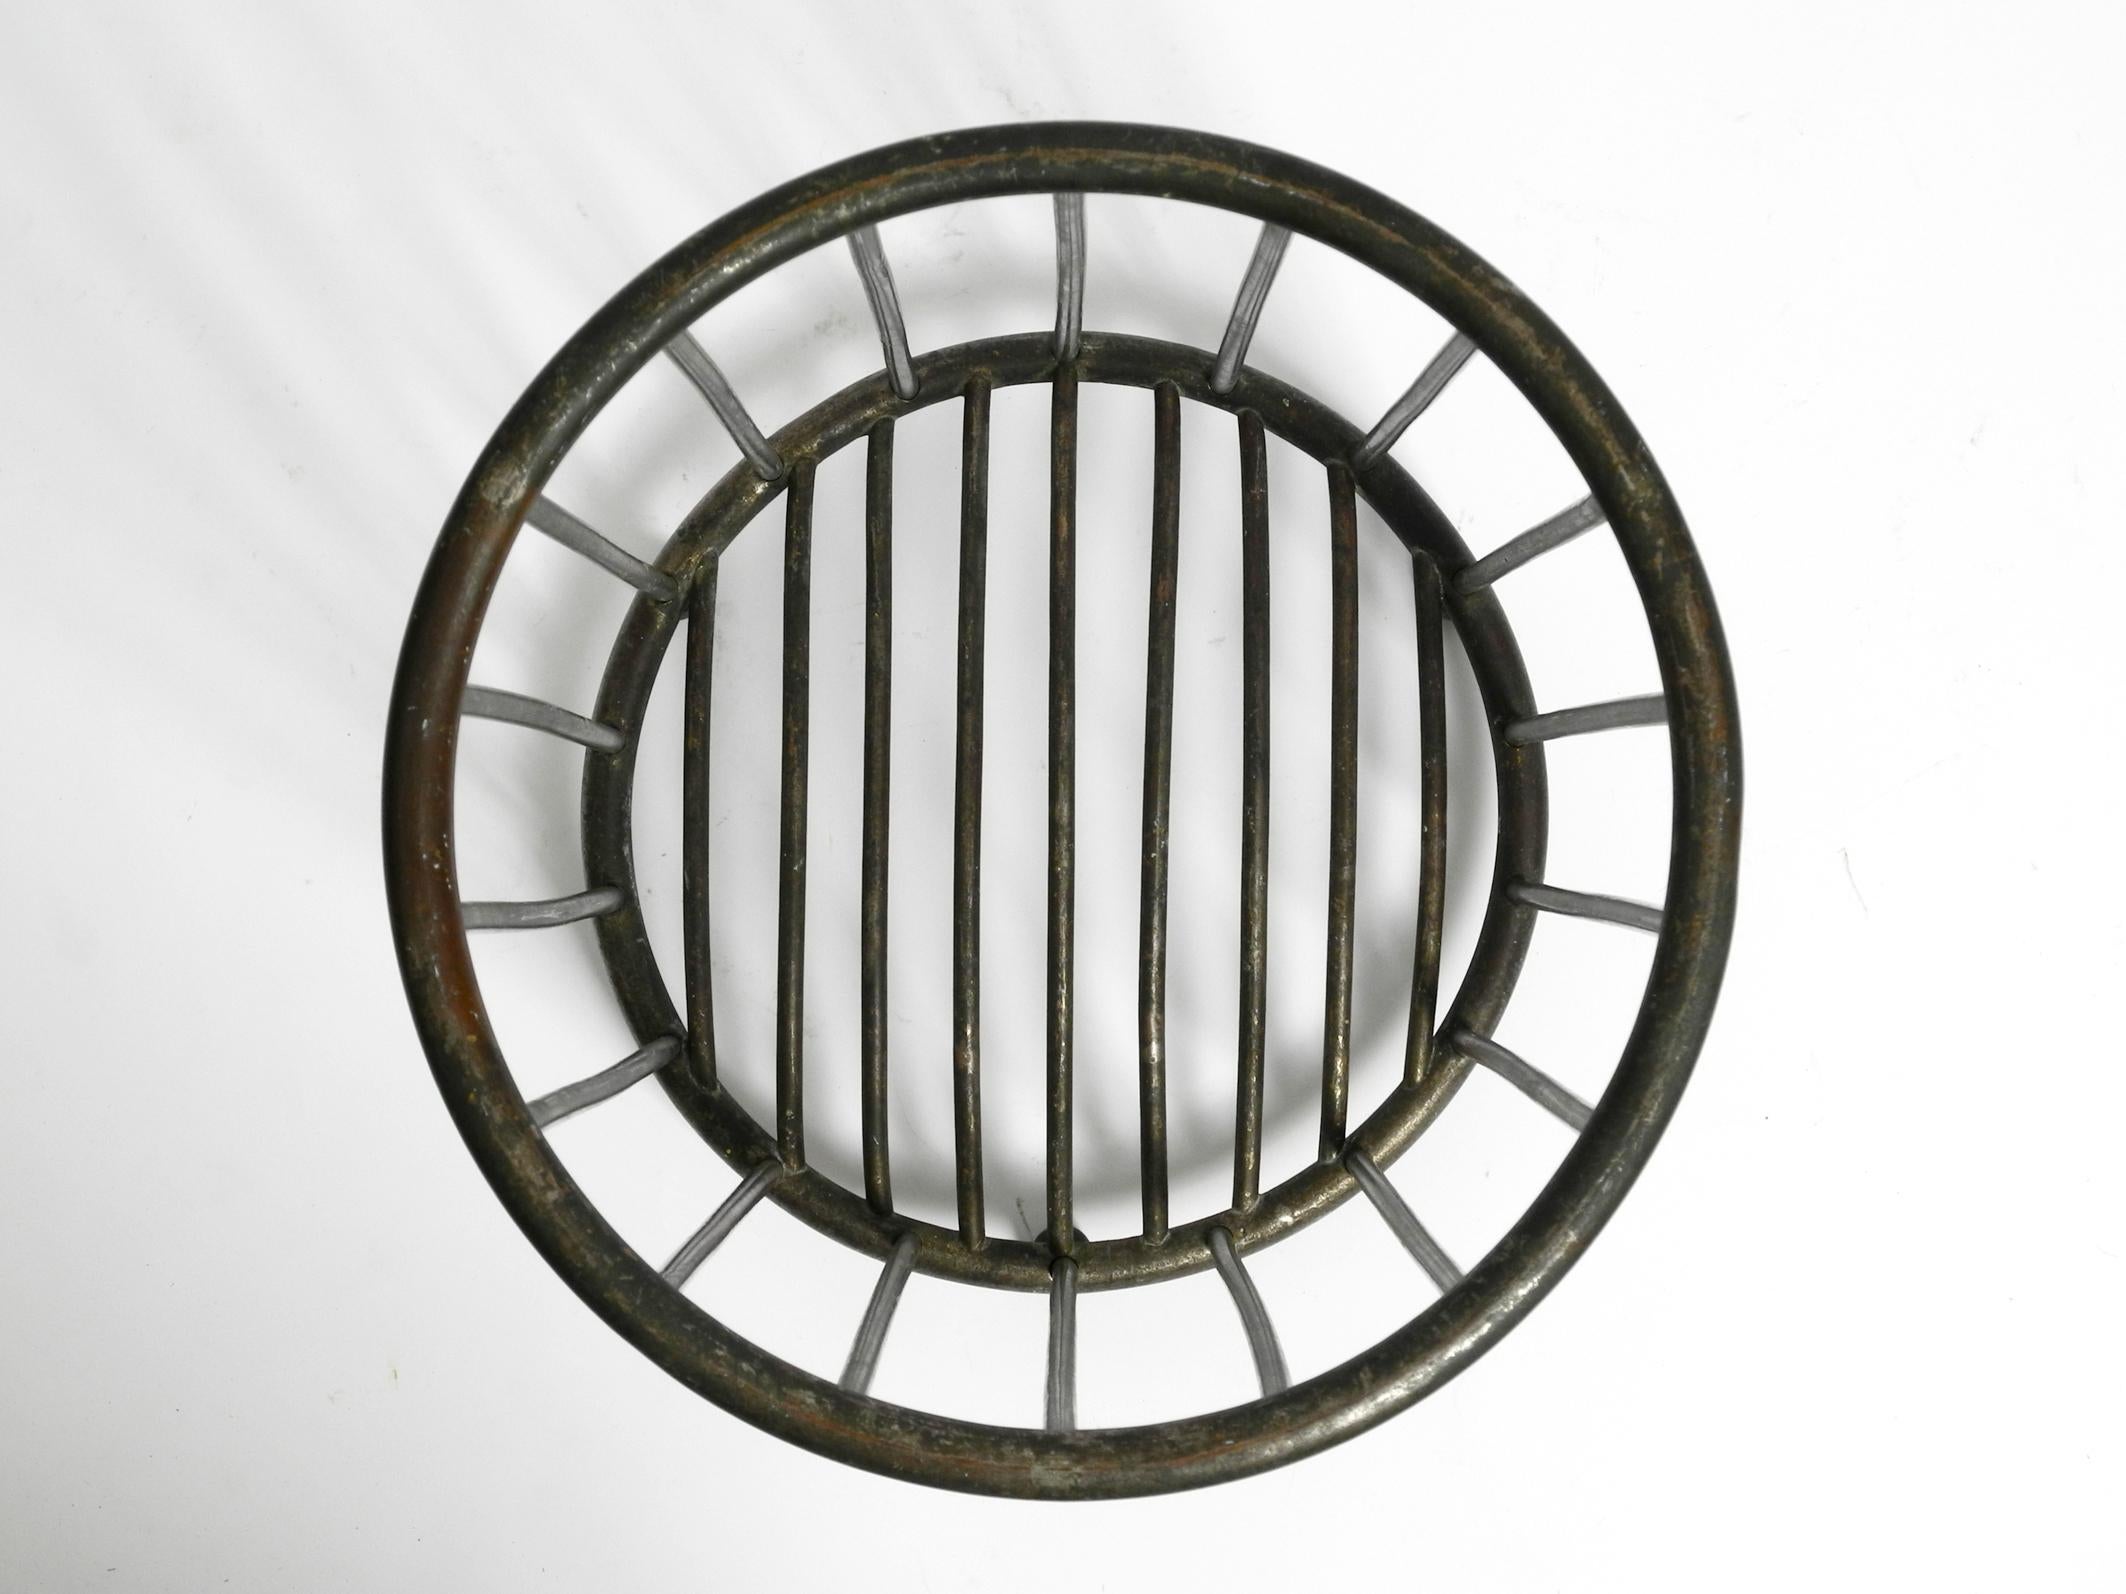 Art Deco Original Mott's Plumbing Towel Basket Made of Nickel-Plated Brass from the 1910s